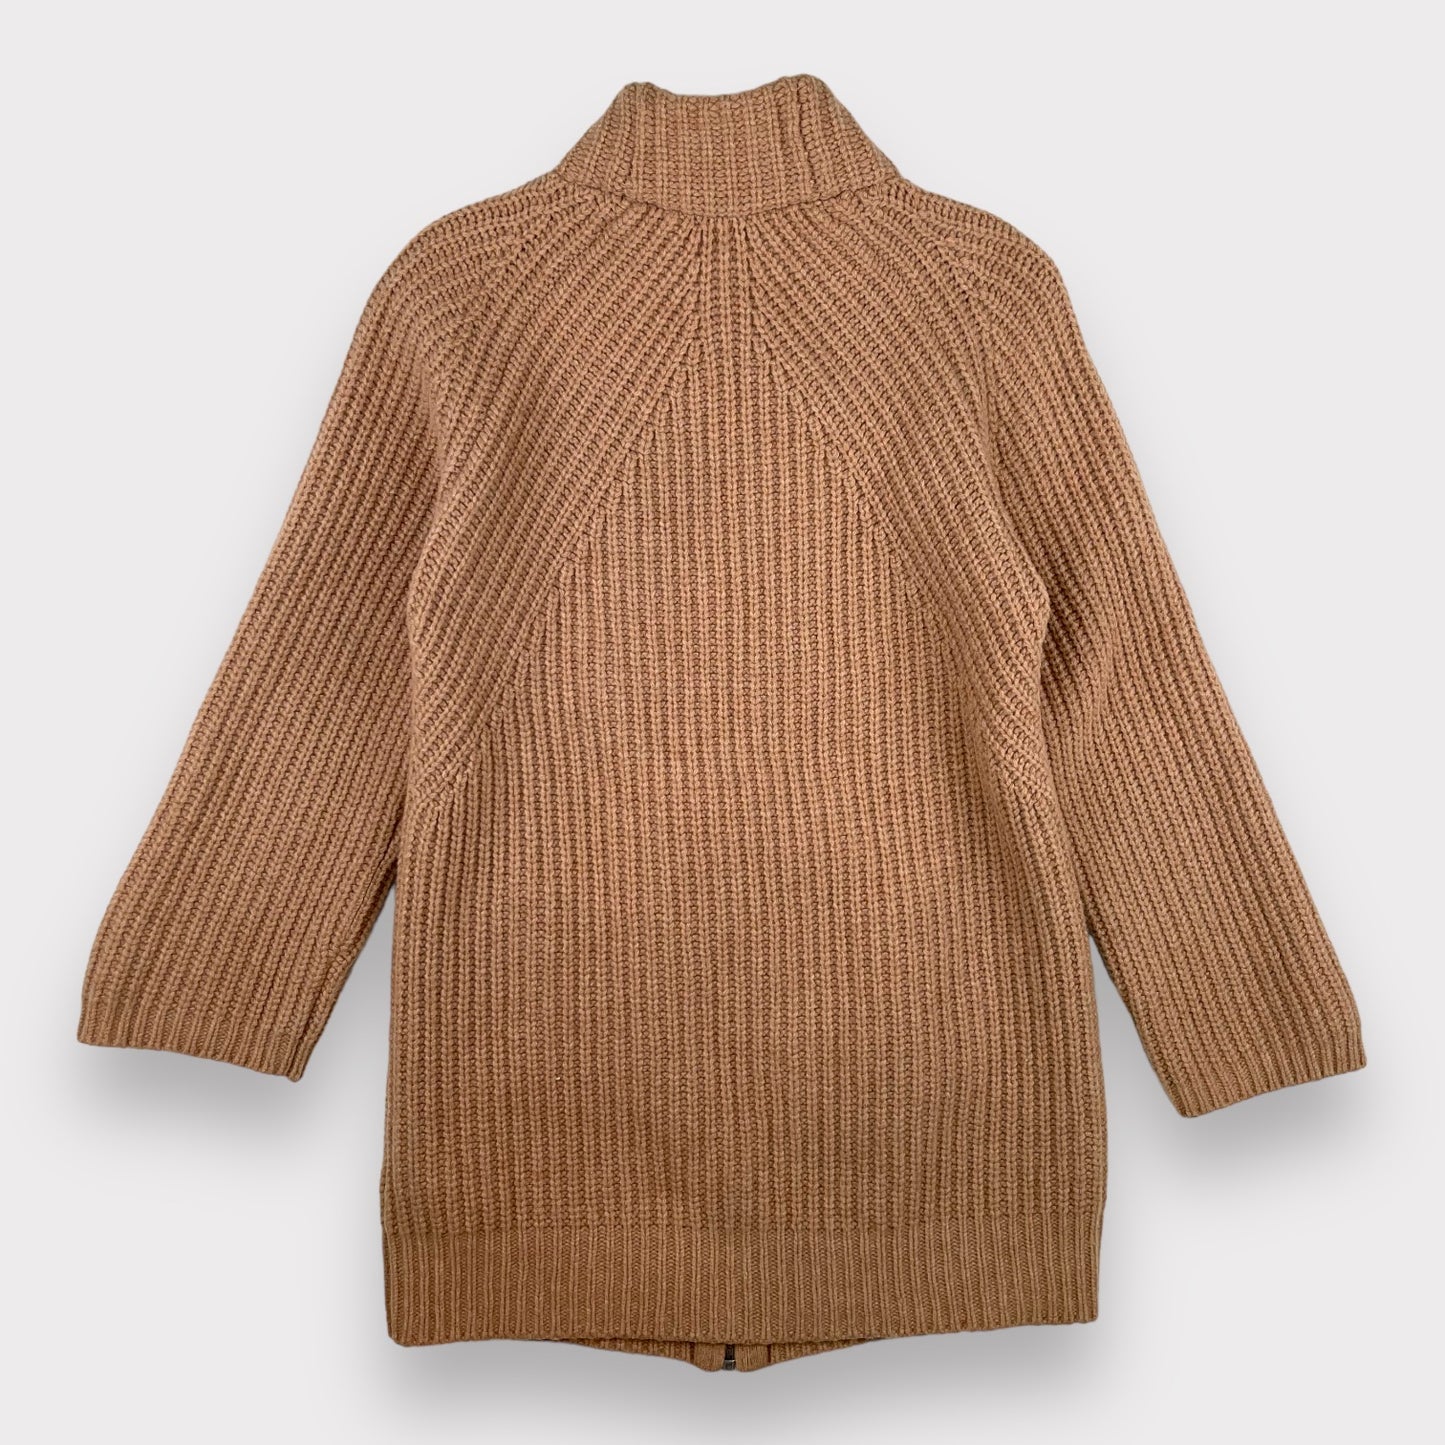 Madewell Ribbed Zip Cardigan Merino Wool Knit Tan Beige Sweater Women's Size S